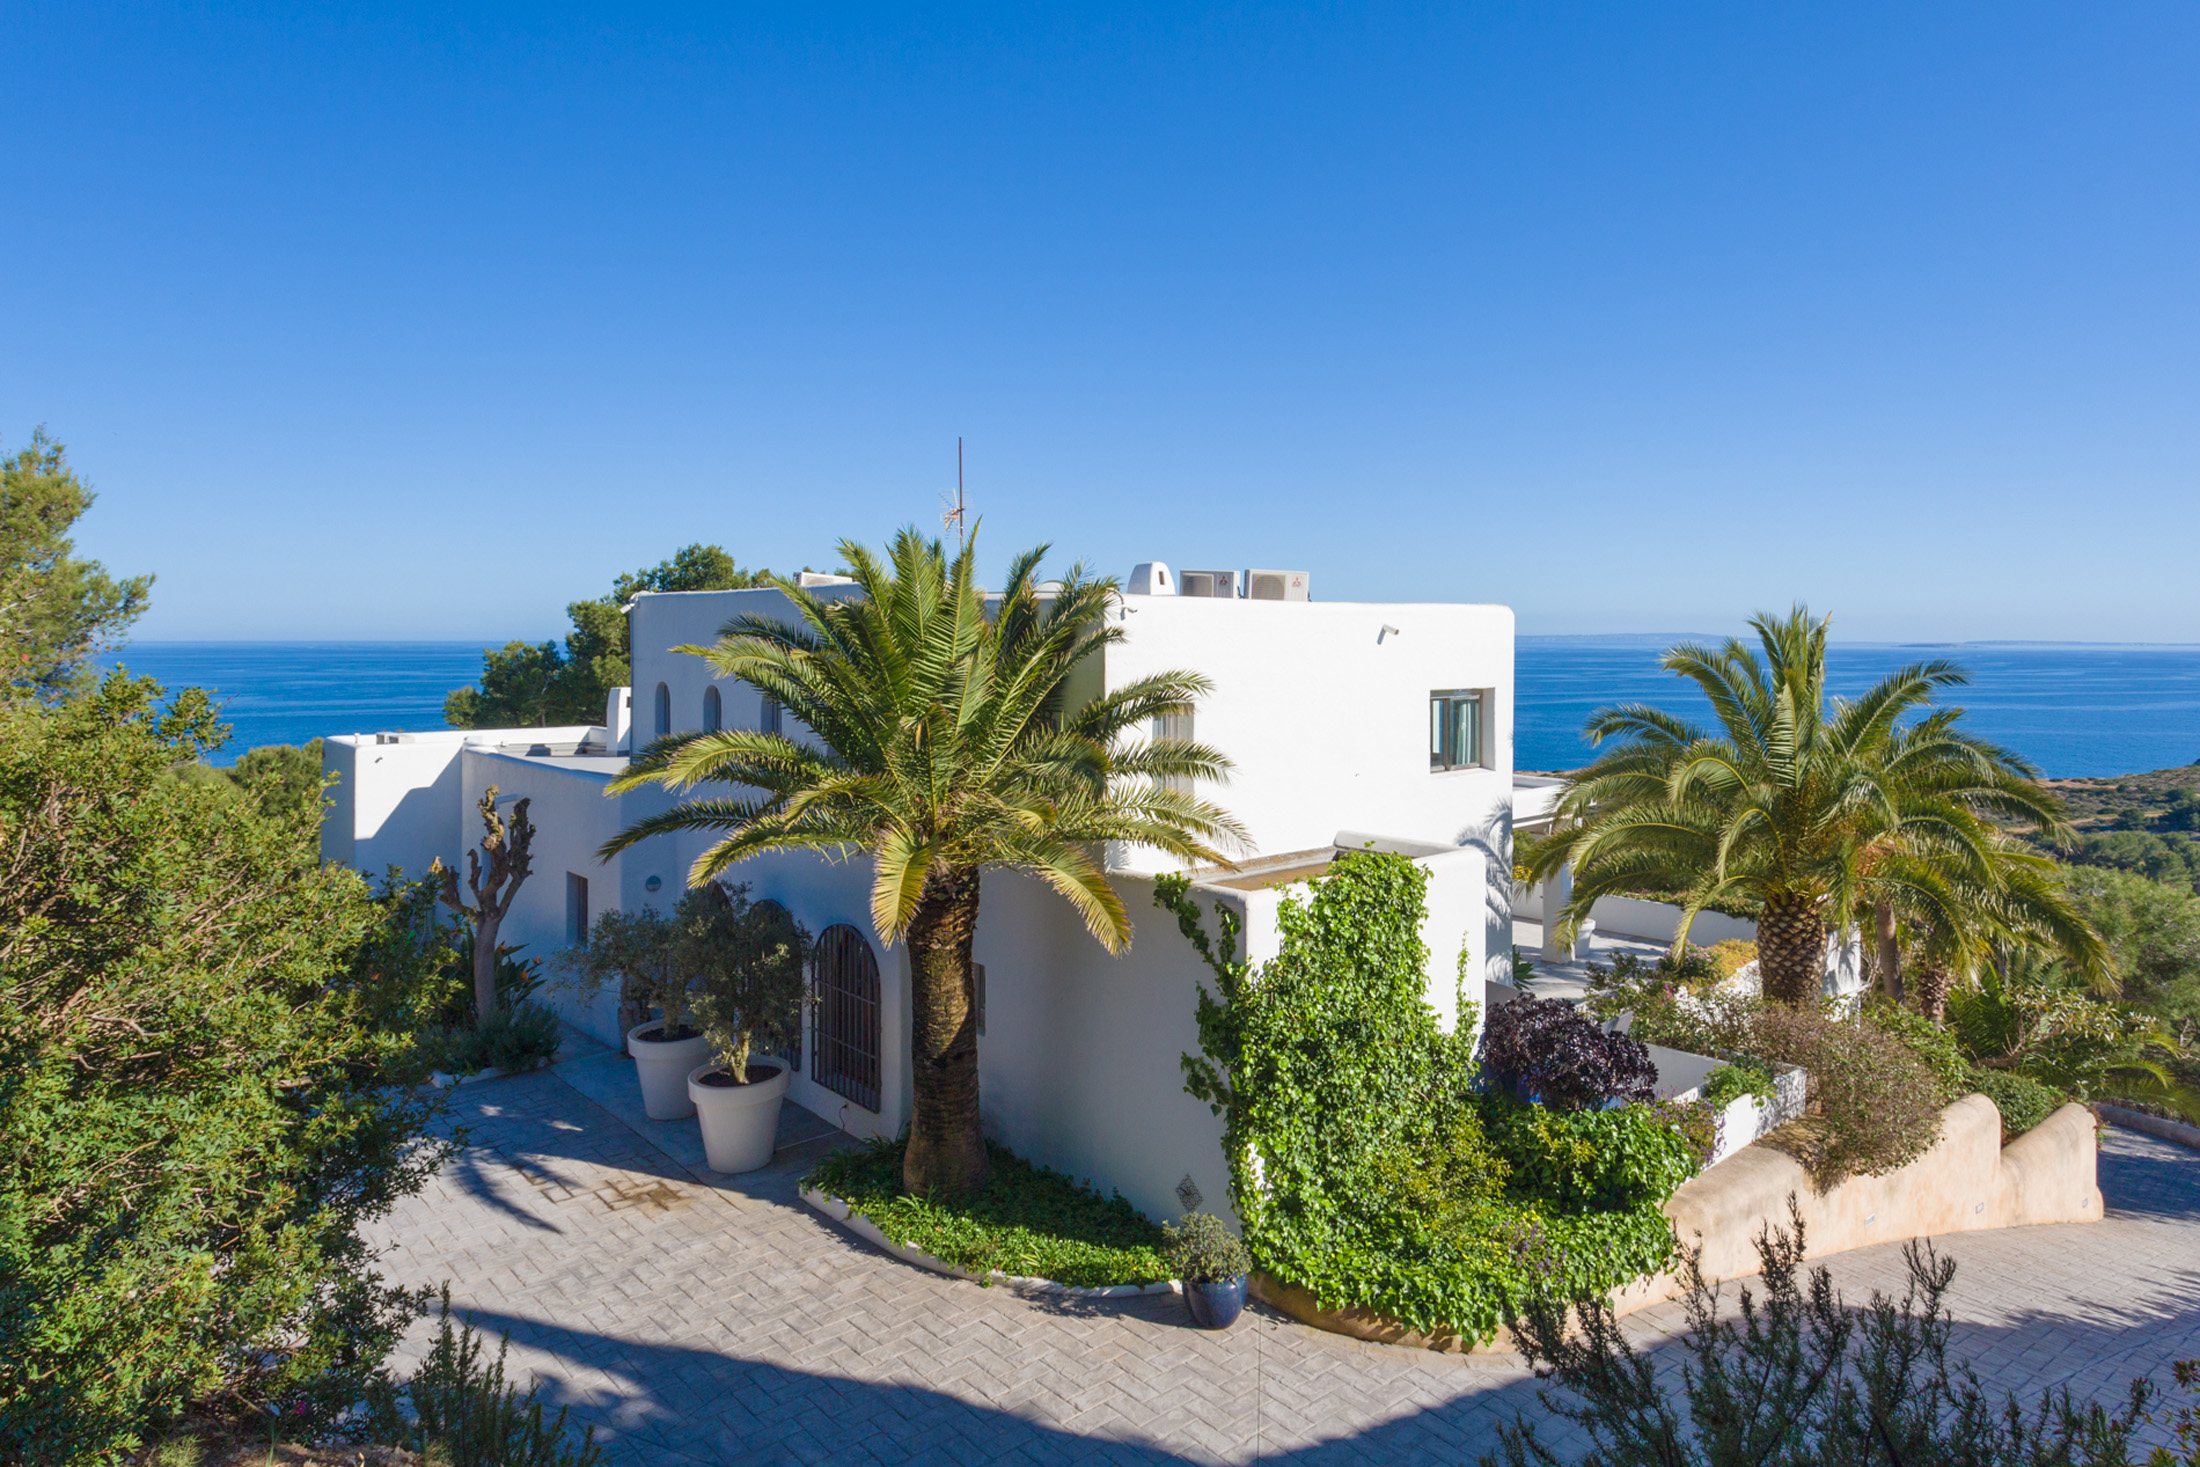 The exterior of Can Calima, a rental villa in Ibiza